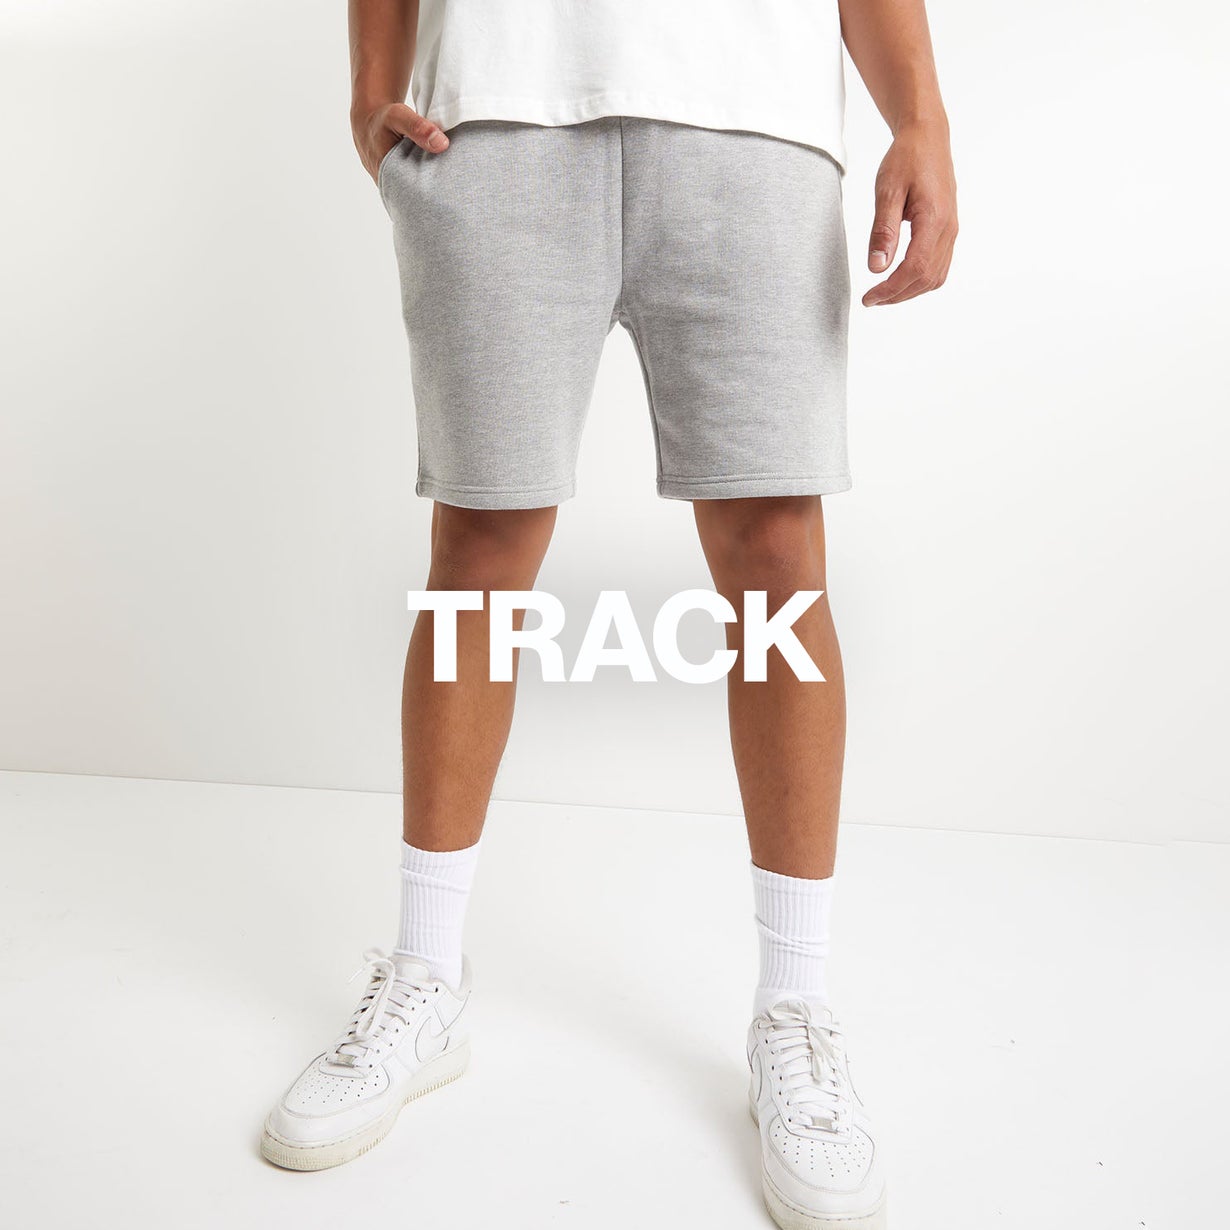 Shop Men's Shorts | Cargo, Track, Cord, Swim, Chino Shorts & More ...